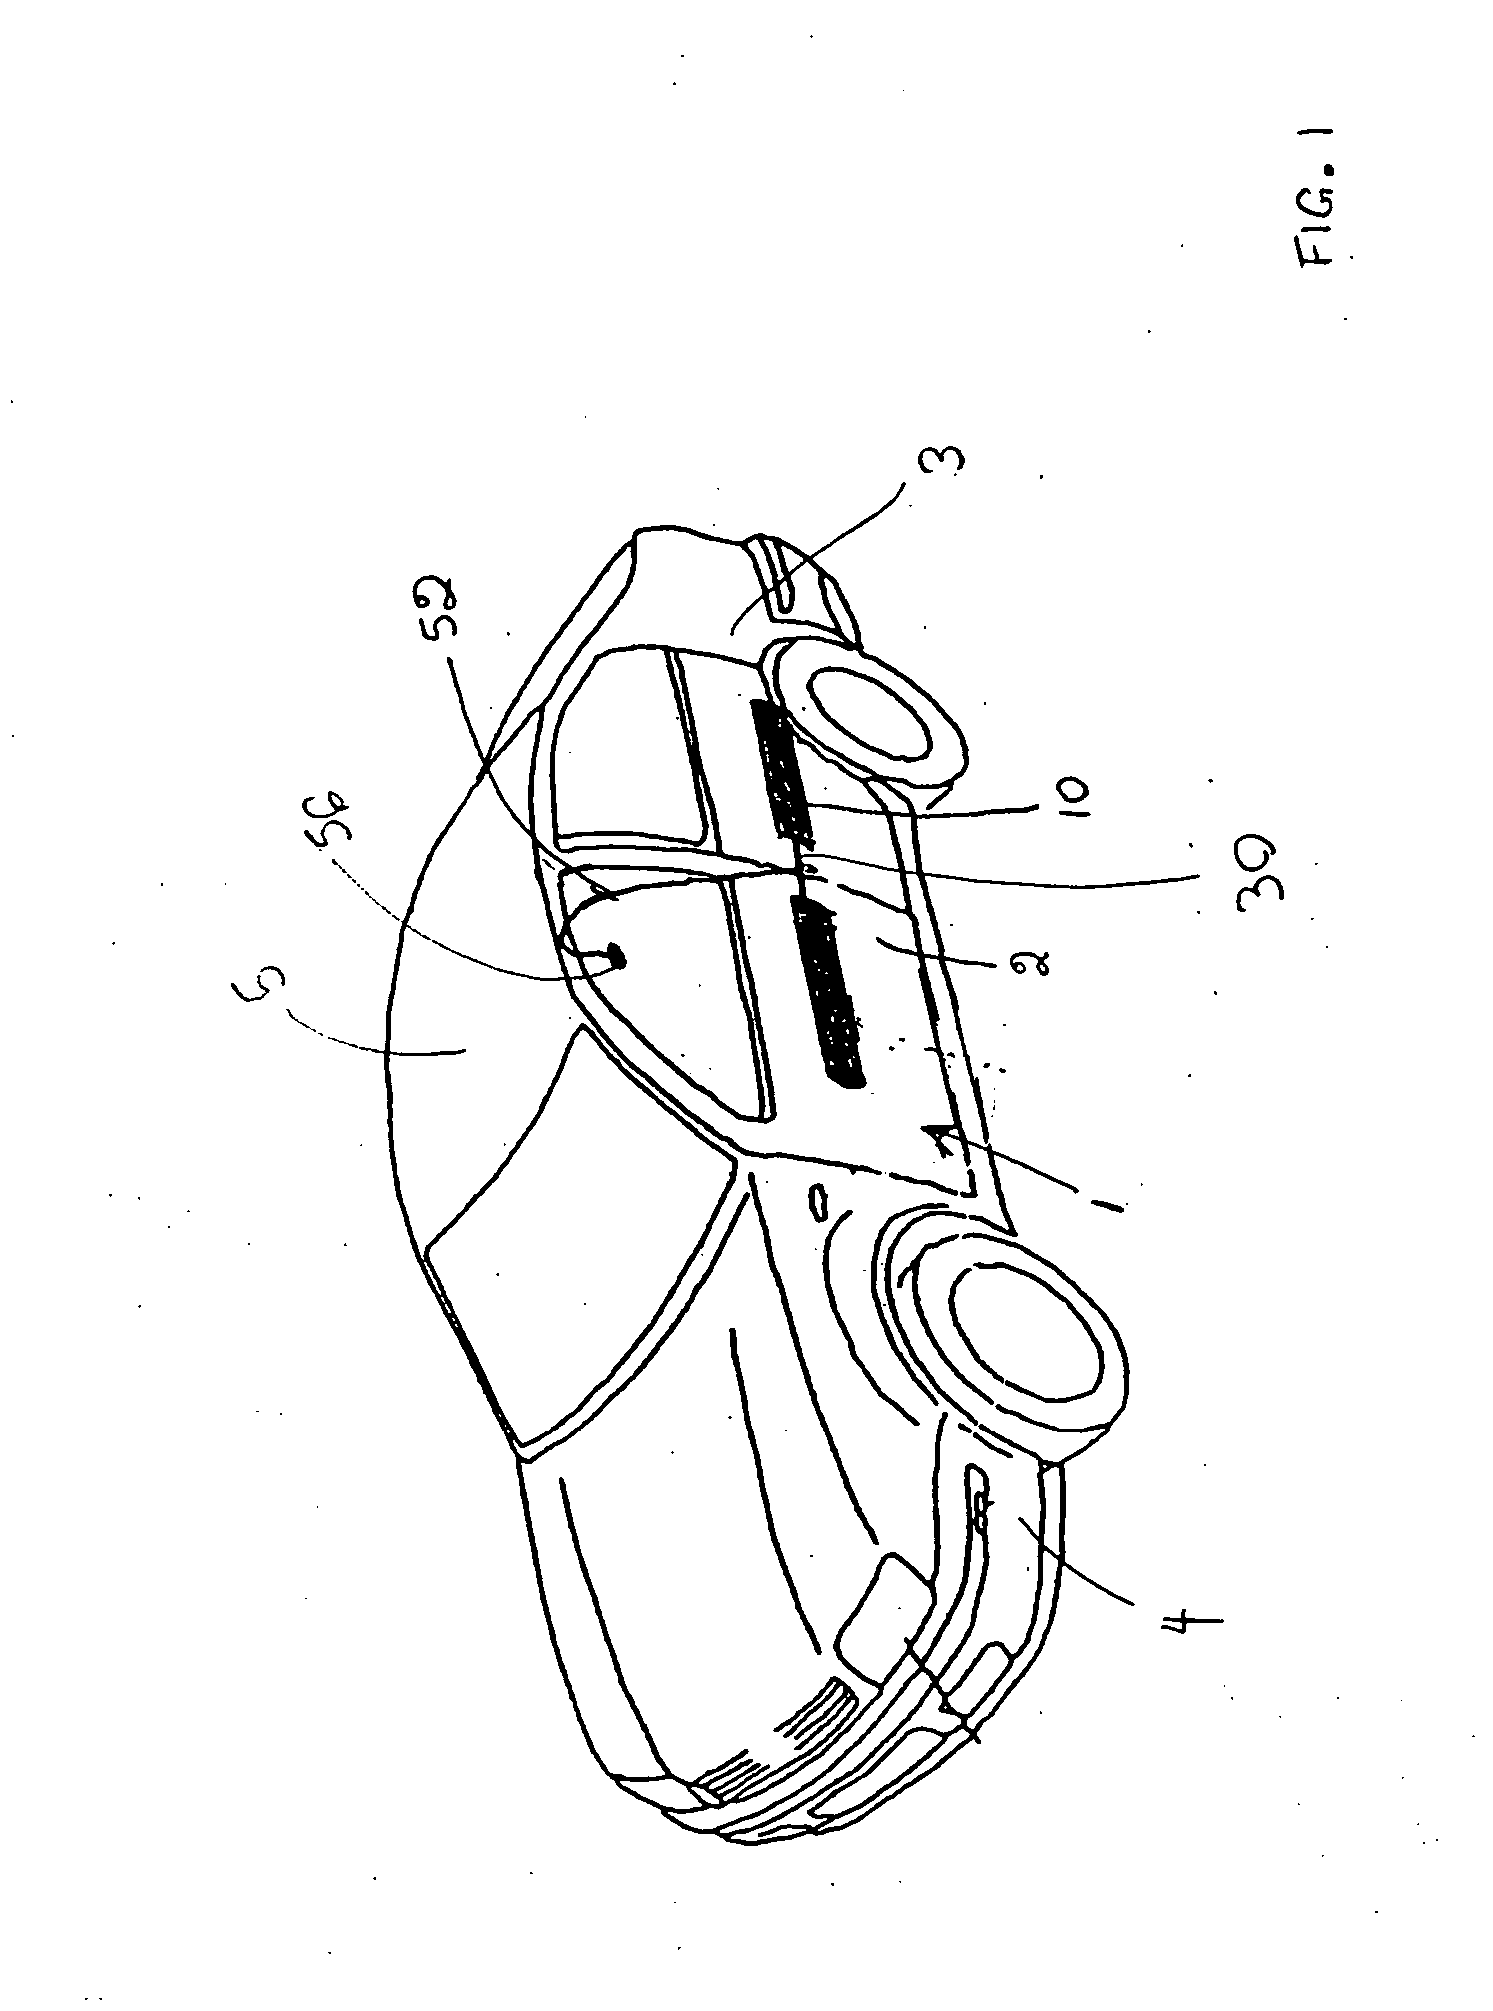 Automobile body panel protector